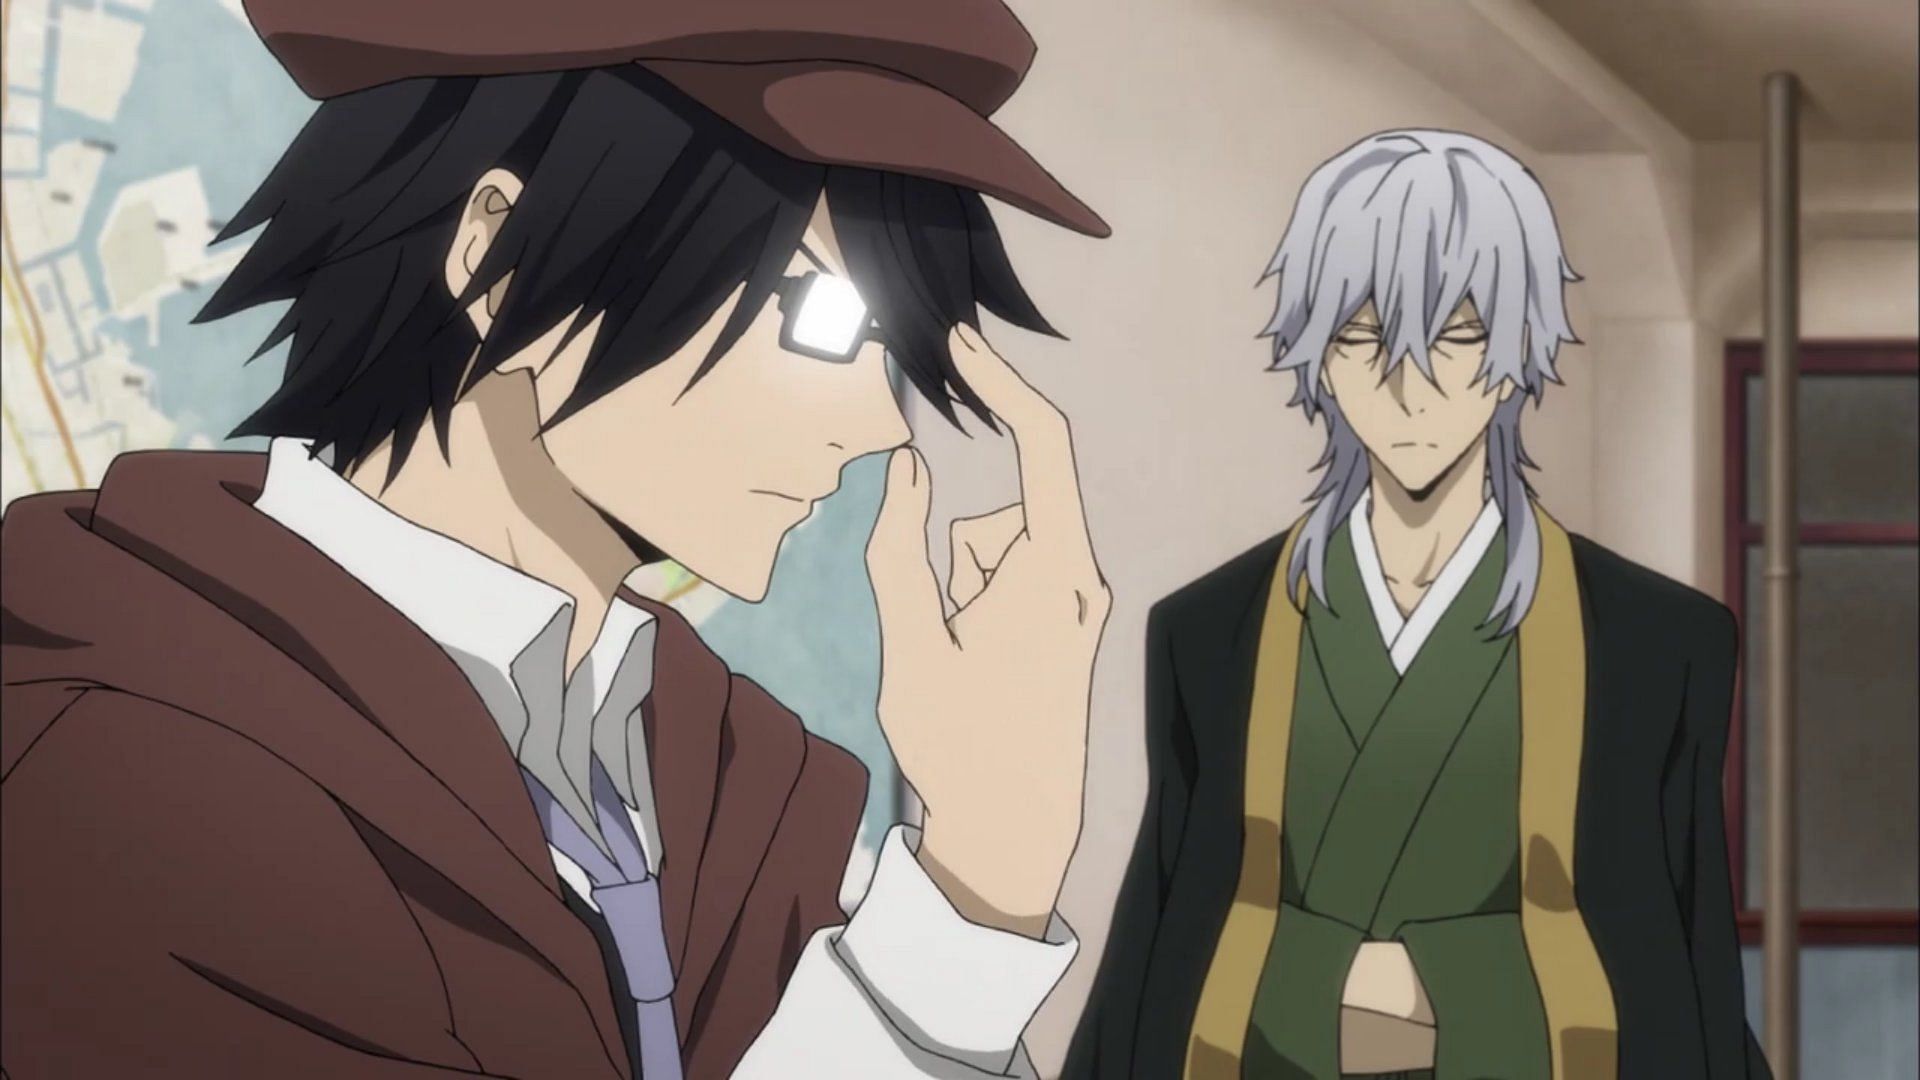 Ranpo (left) and Fukuzawa (right) steal the show in the return of the smash-hit anime series (Image via Studio Bones)